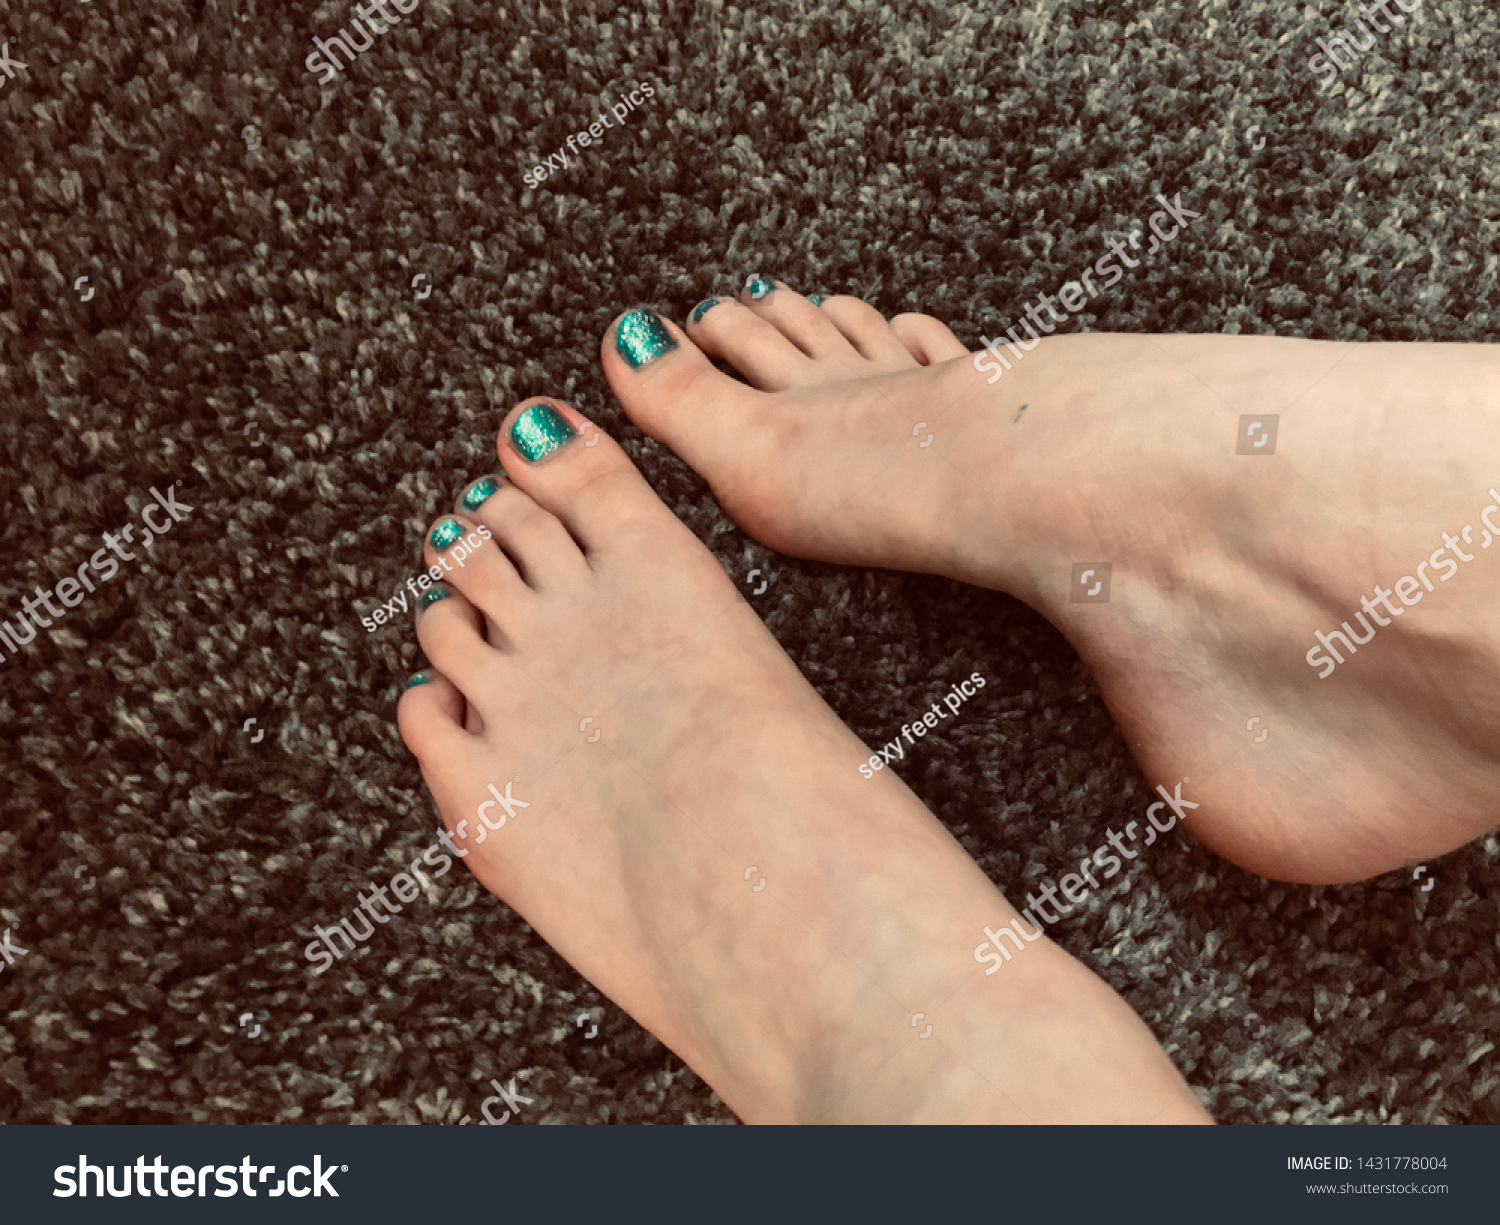 Beautiful feet sex images